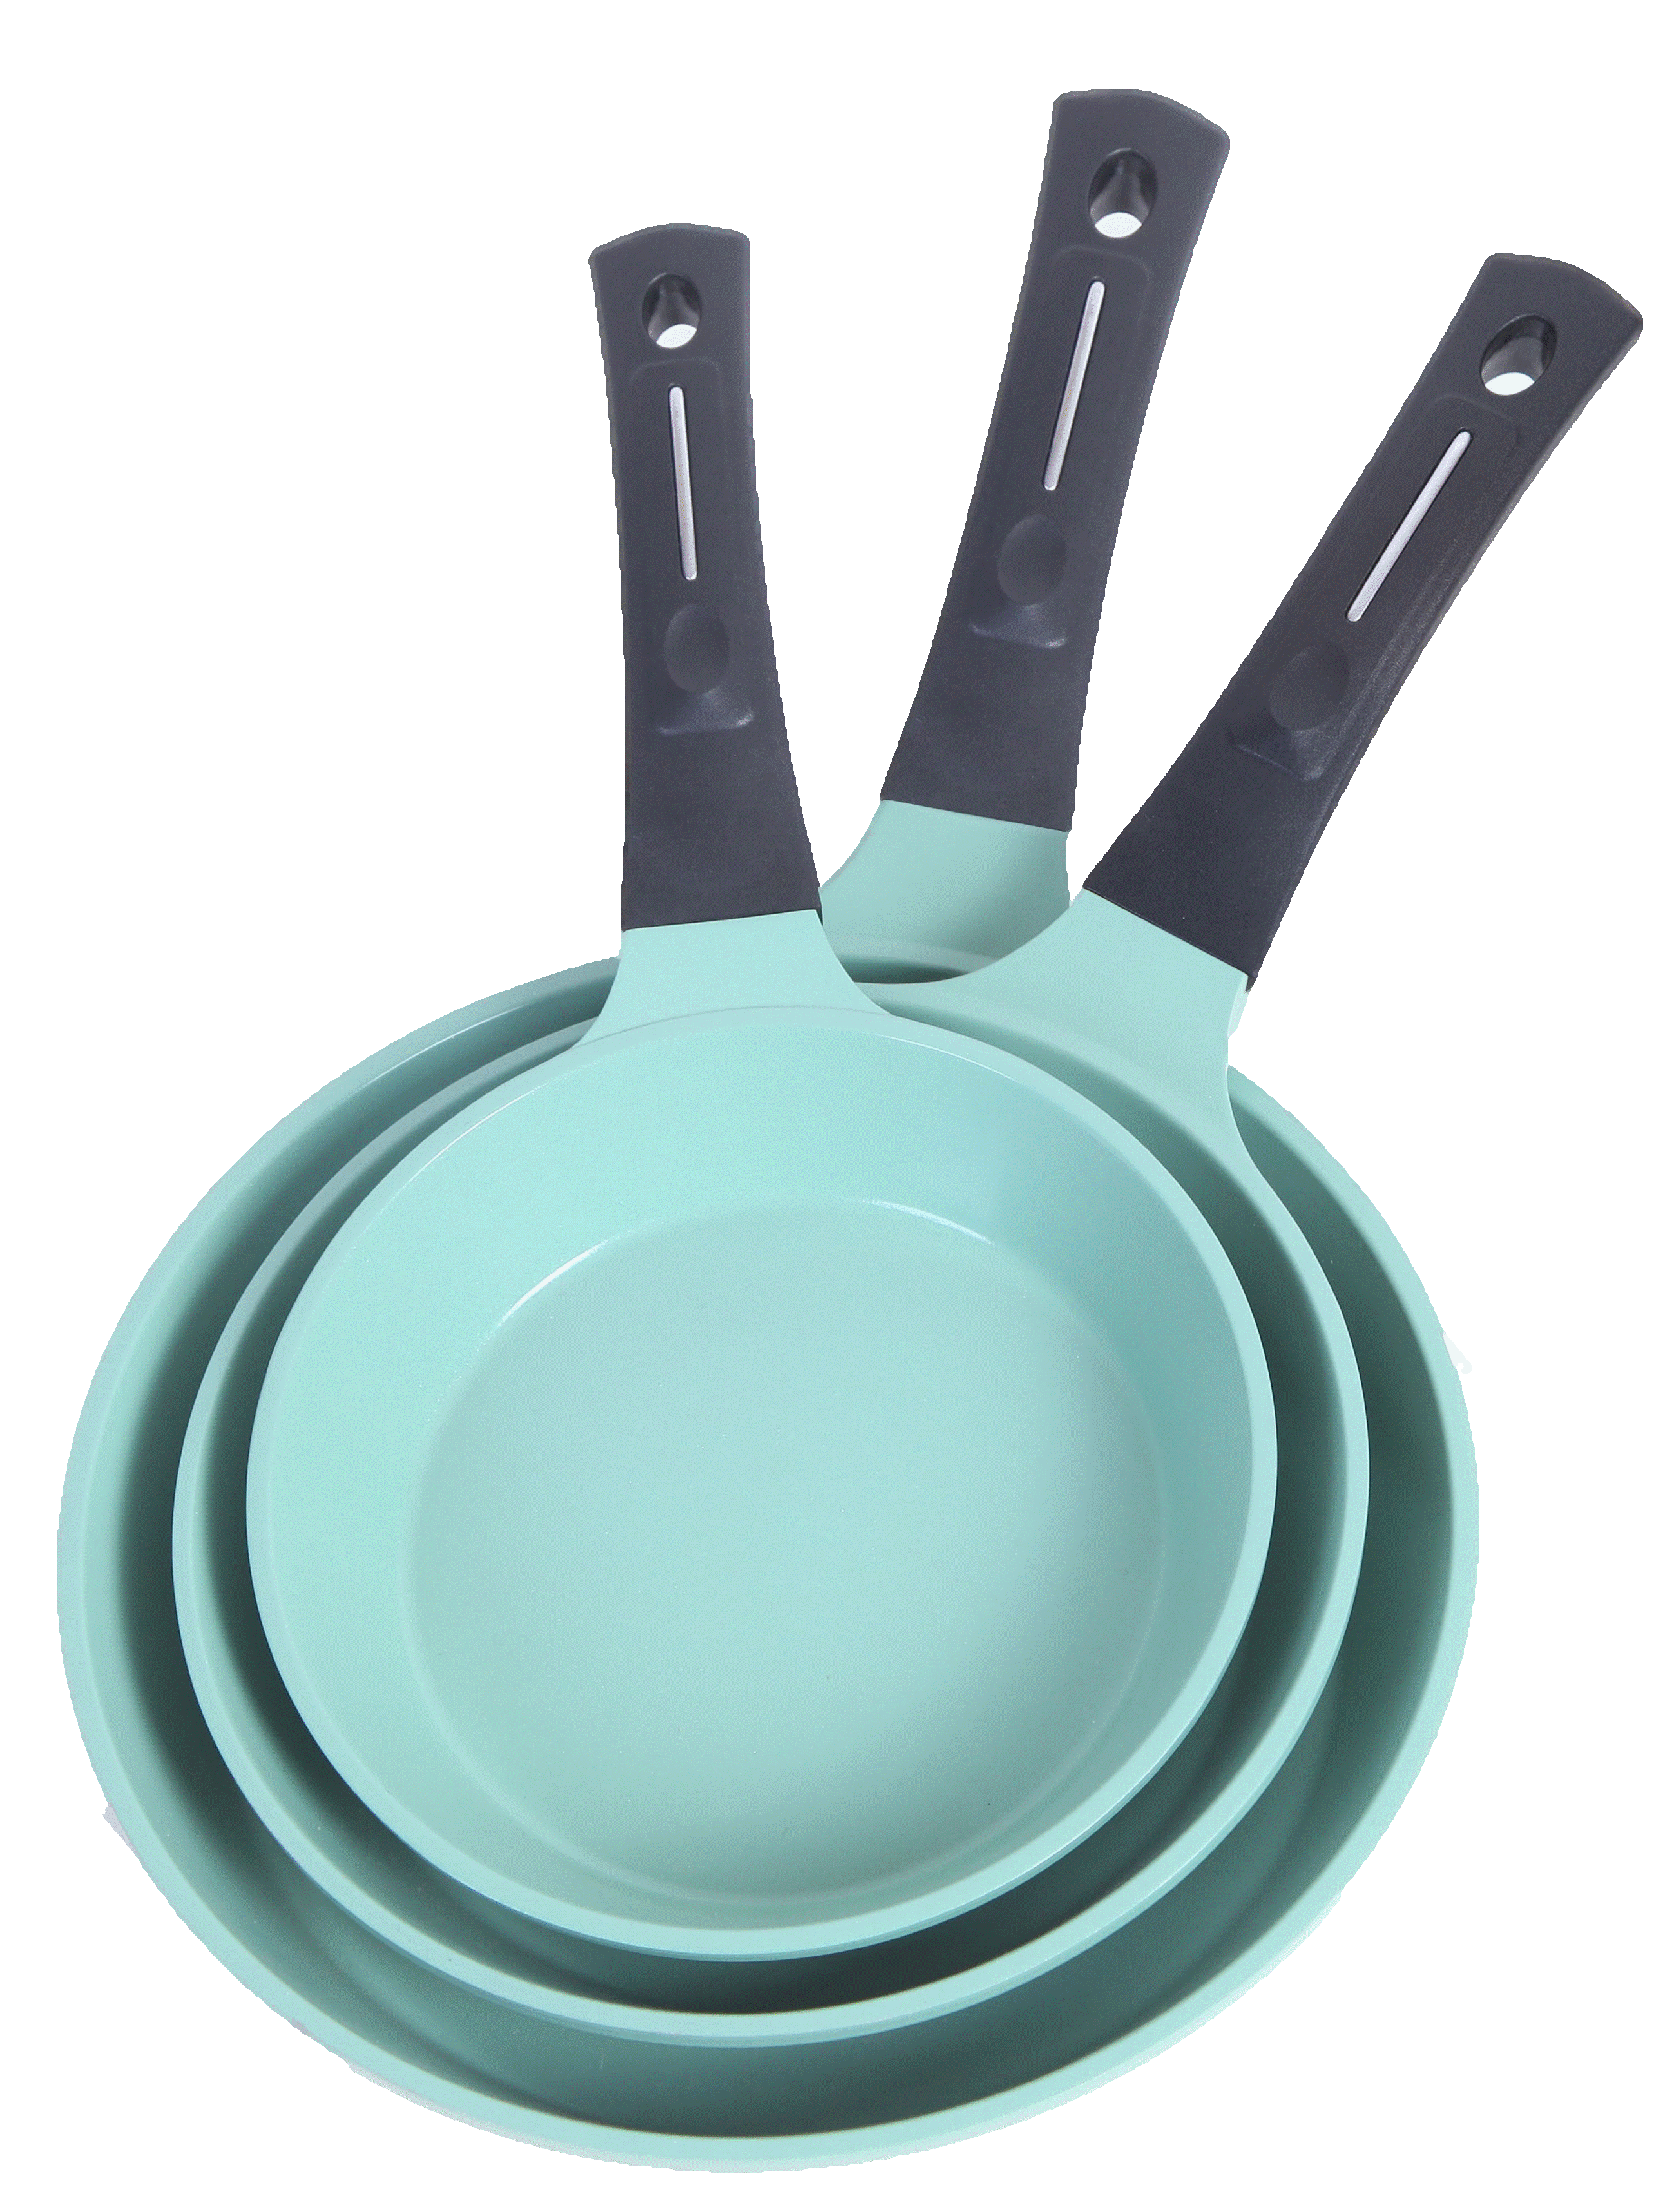 Neware EUROCOOK Jade Powder-coated Ceramic Non-Stick Cookware Set, 3-Piece  PFOA-Free Frying Pans